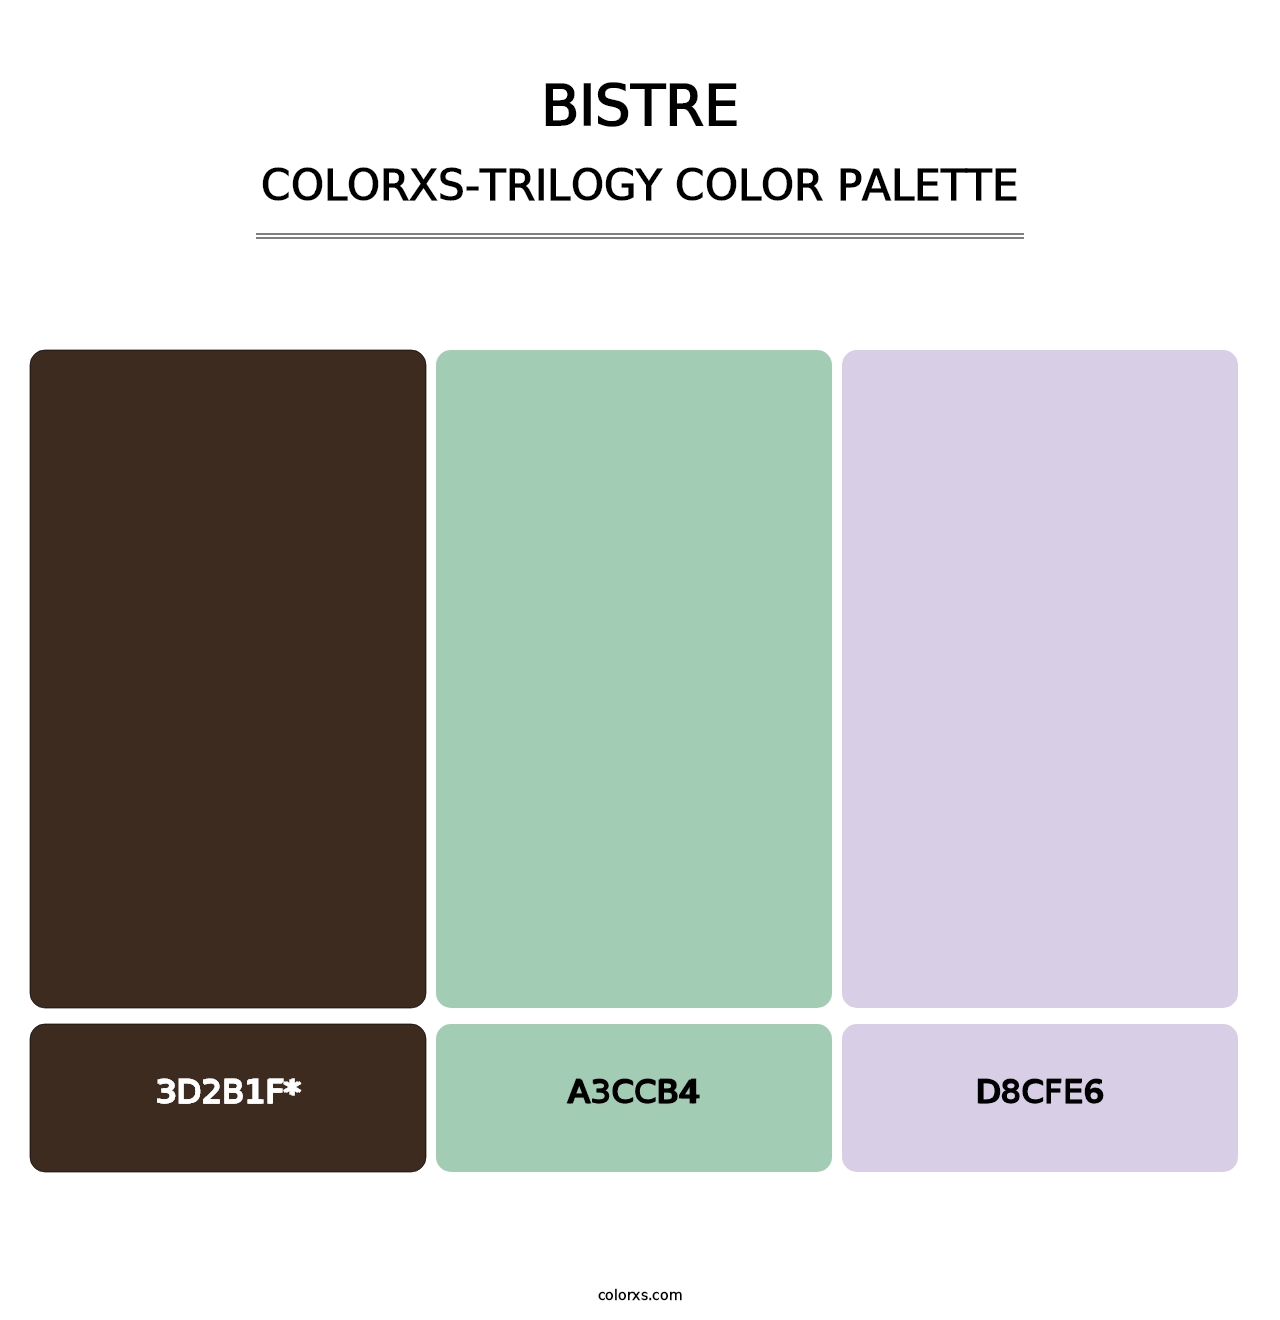 Bistre - Colorxs Trilogy Palette